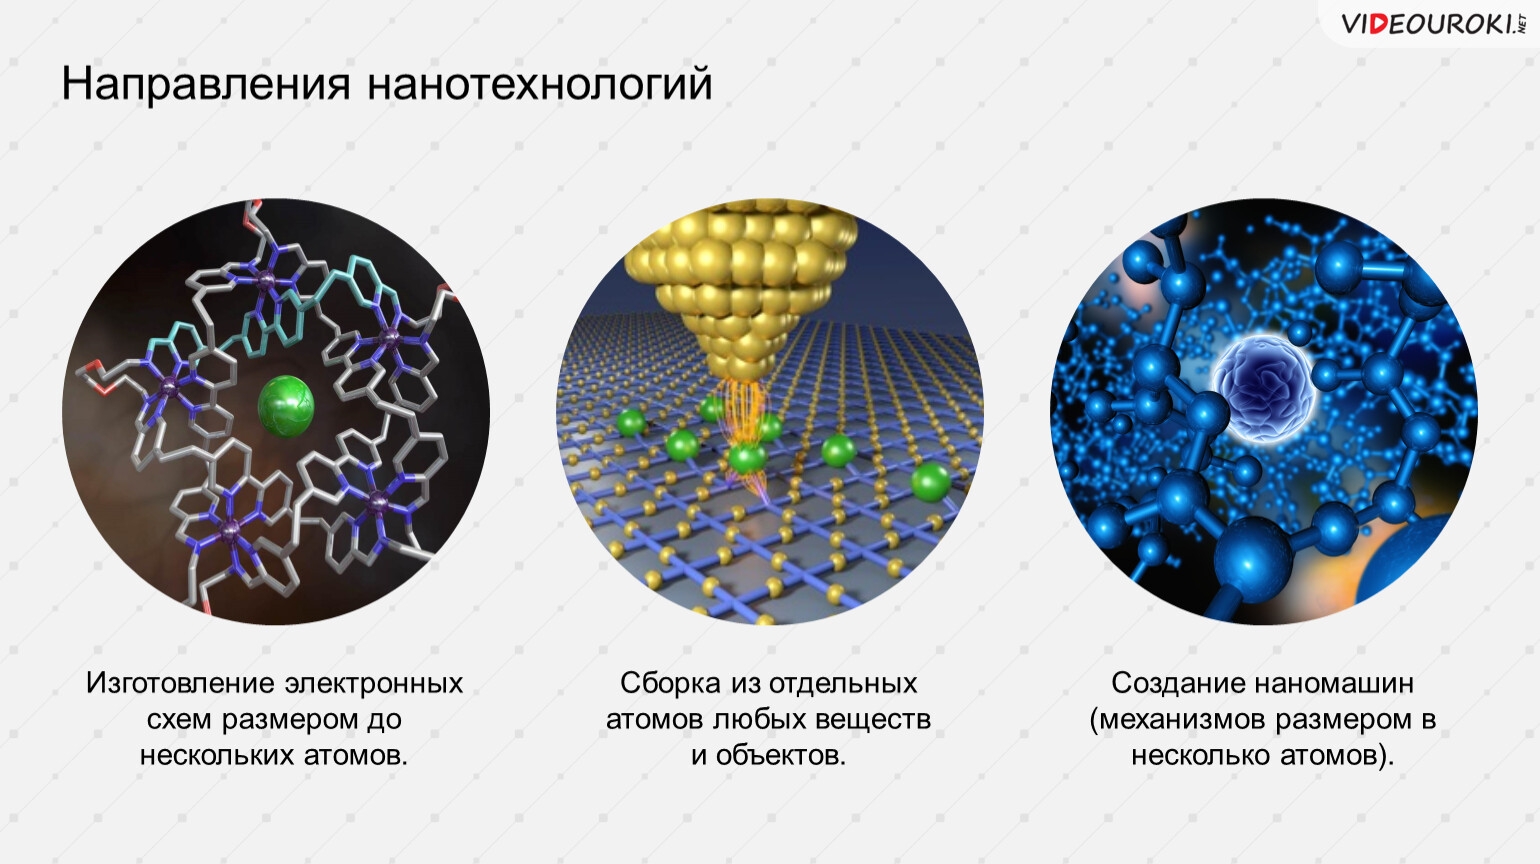 Год нанотехнологий. Направления нанотехнологий. Нанотехнологии схема. Нанотехнологии презентация. Основные направления нанотехнологии.